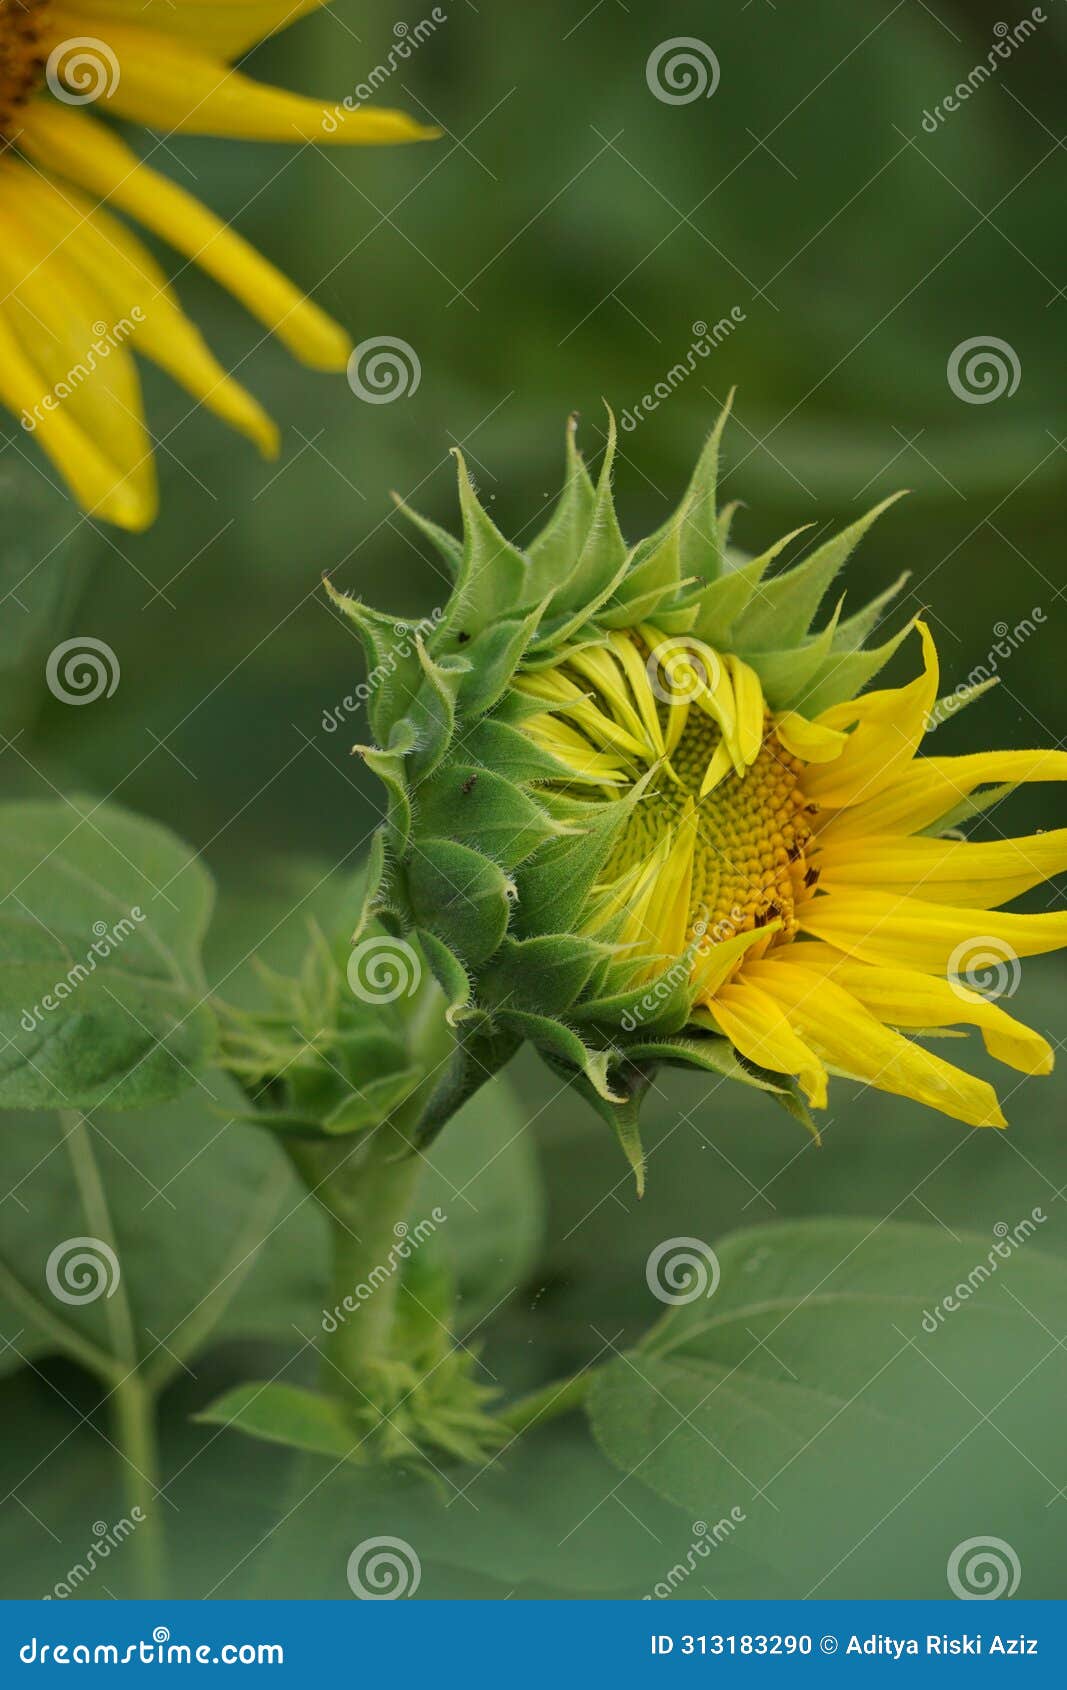 sunflower (helianthus annuus, bunga matahari) on the tree.